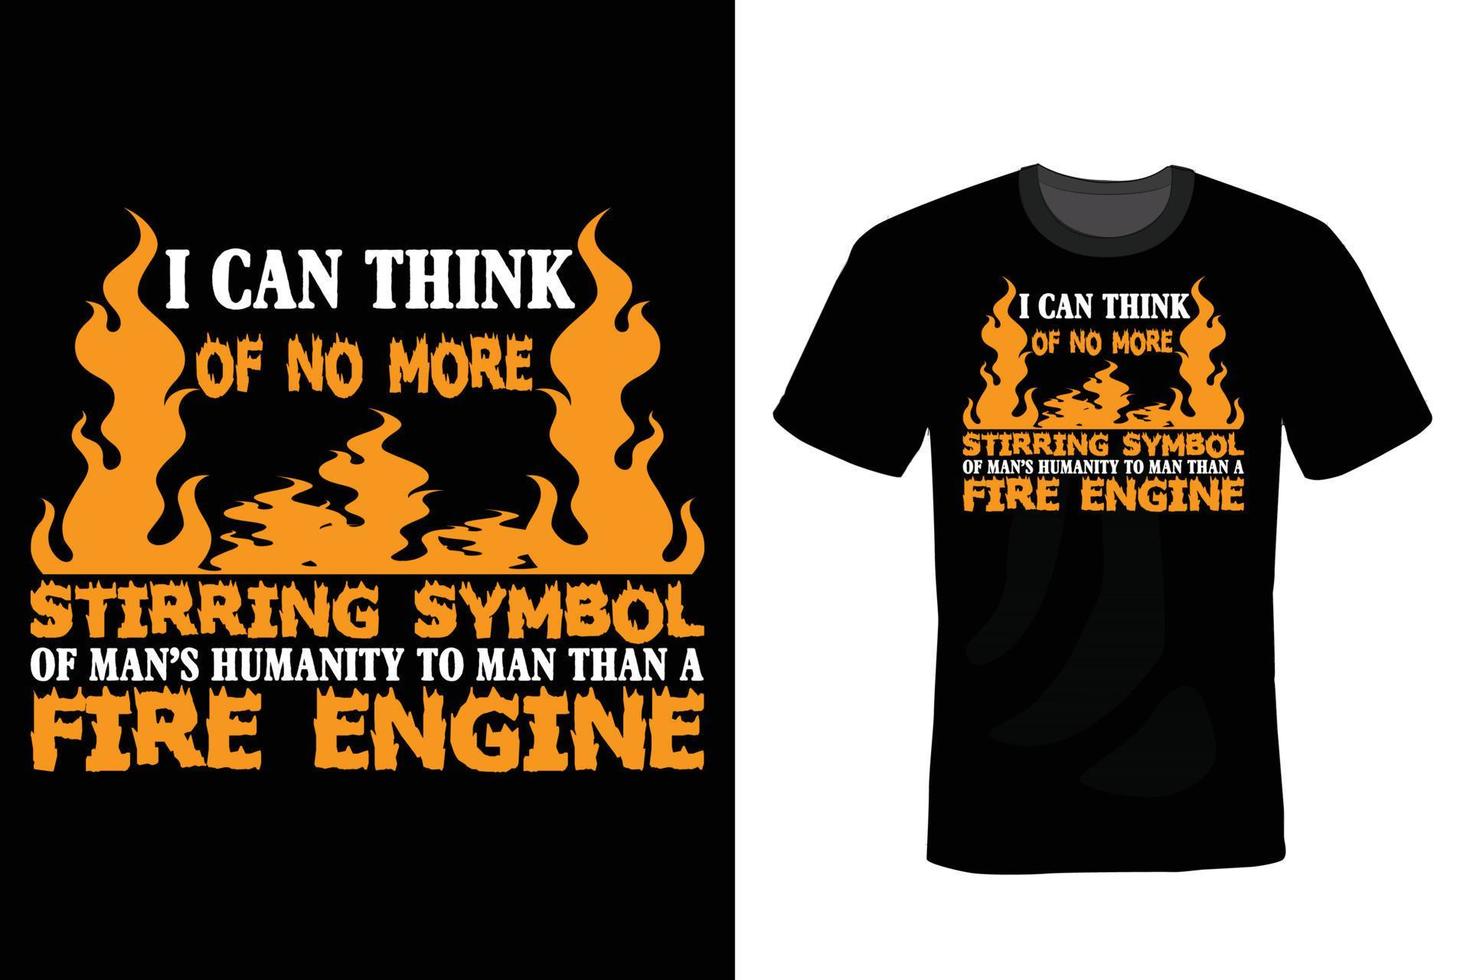 Firefighter T shirt design, vintage, typography vector